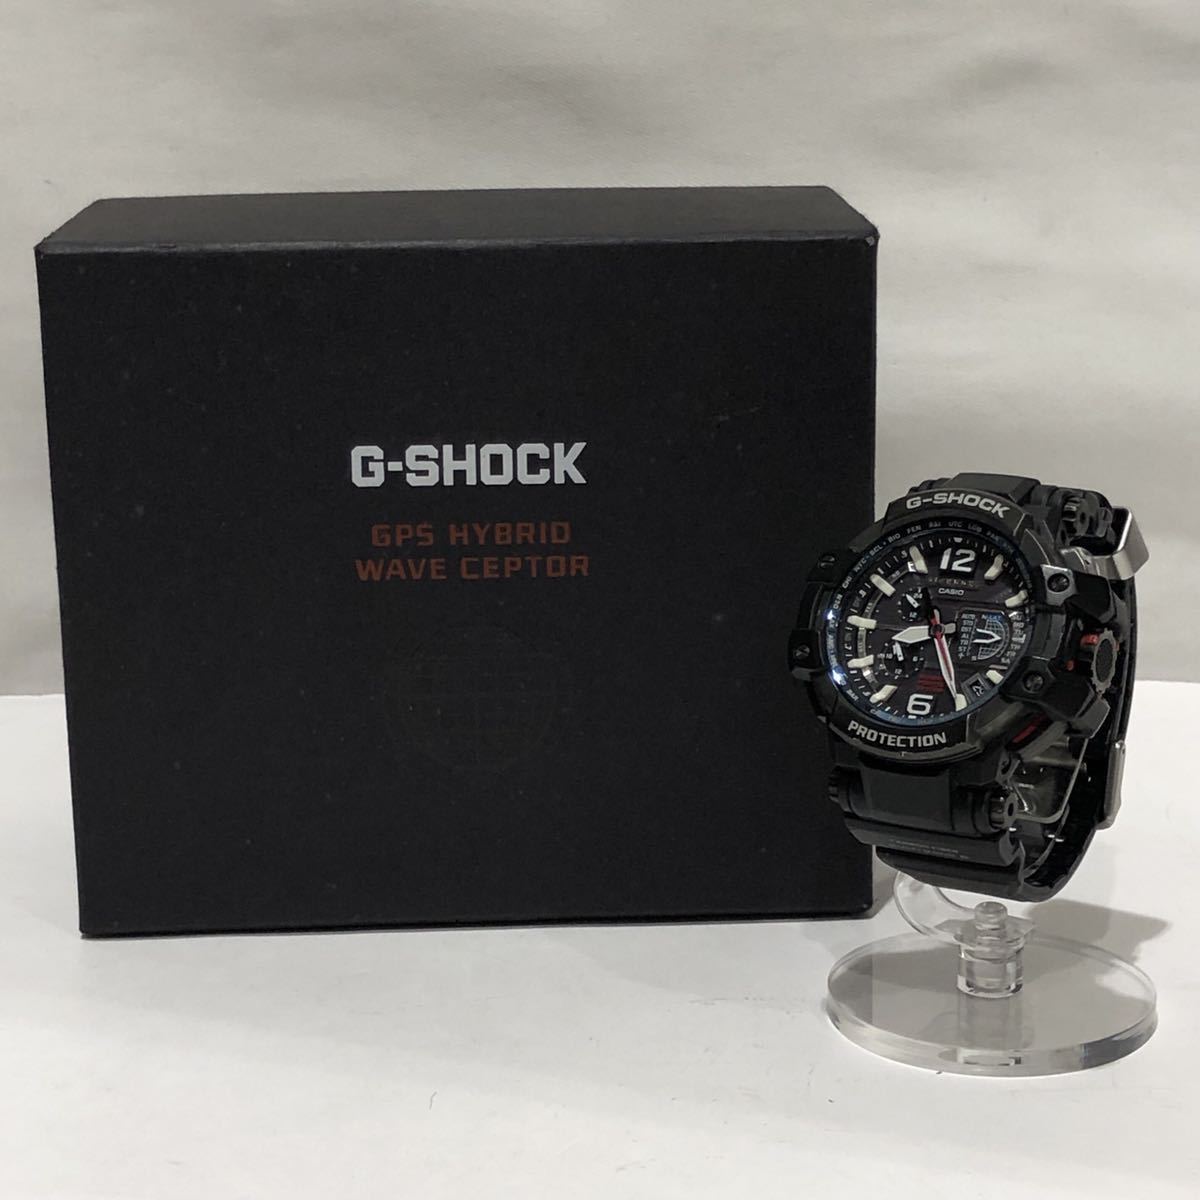 【CASIO】G-SHOCK GRAVITYMASTER GPW-1000-1AJF ブラック CASIO Gショック グラビティマスター アナログ ラバー ソーラー腕時計 ts202206